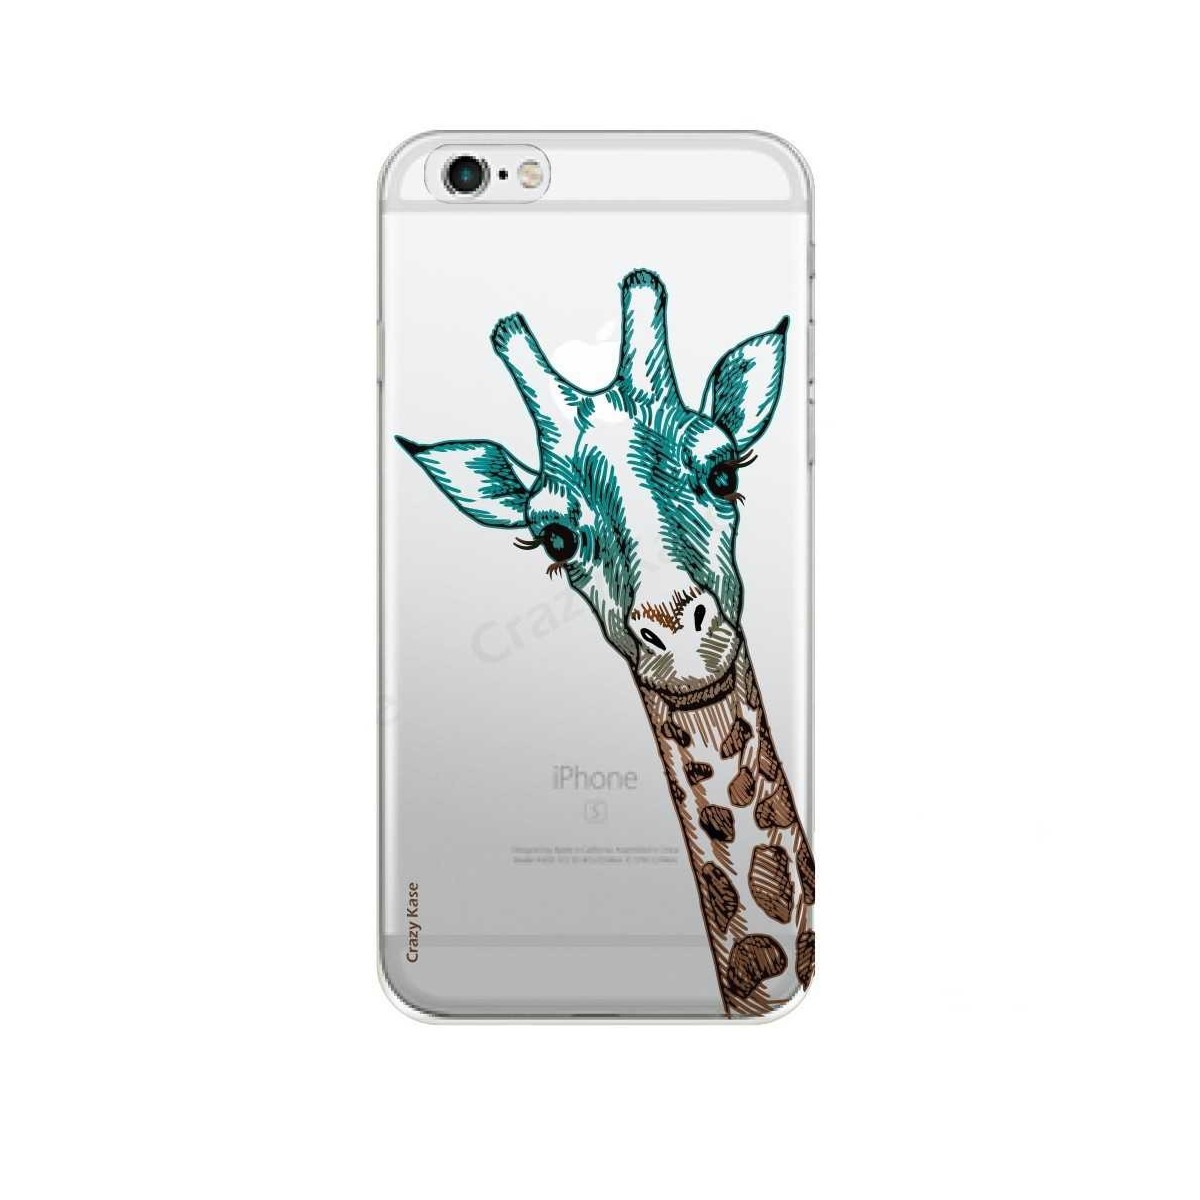 Coque iPhone 6 / 6s Transparente souple motif Tête de Girafe - Crazy Kase